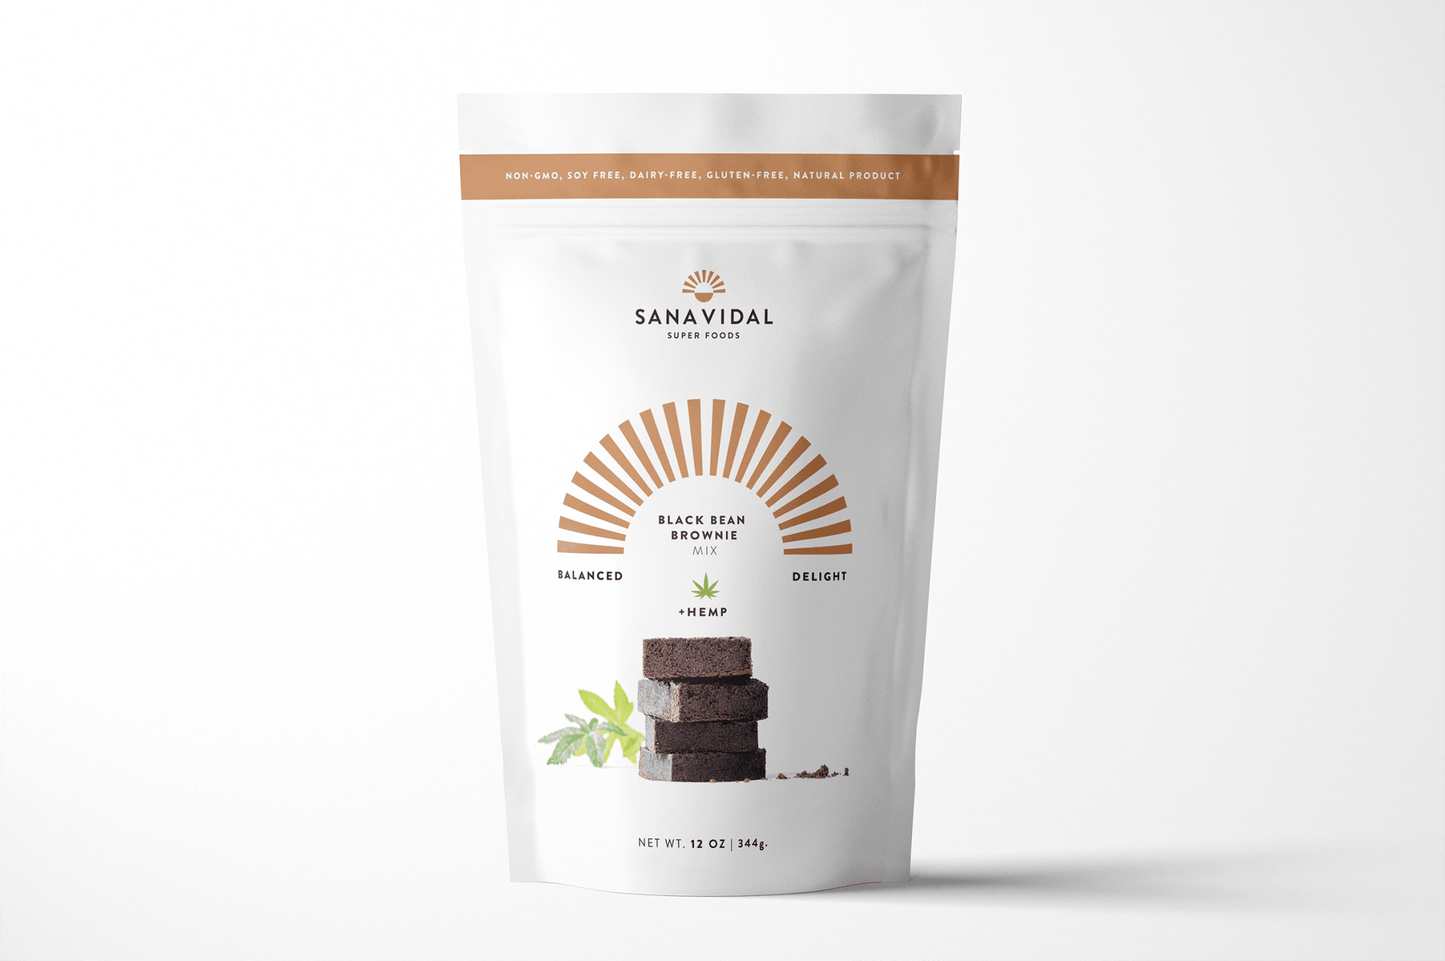 Sana Vidal Black Bean Brownie Mix with hemp packaging front